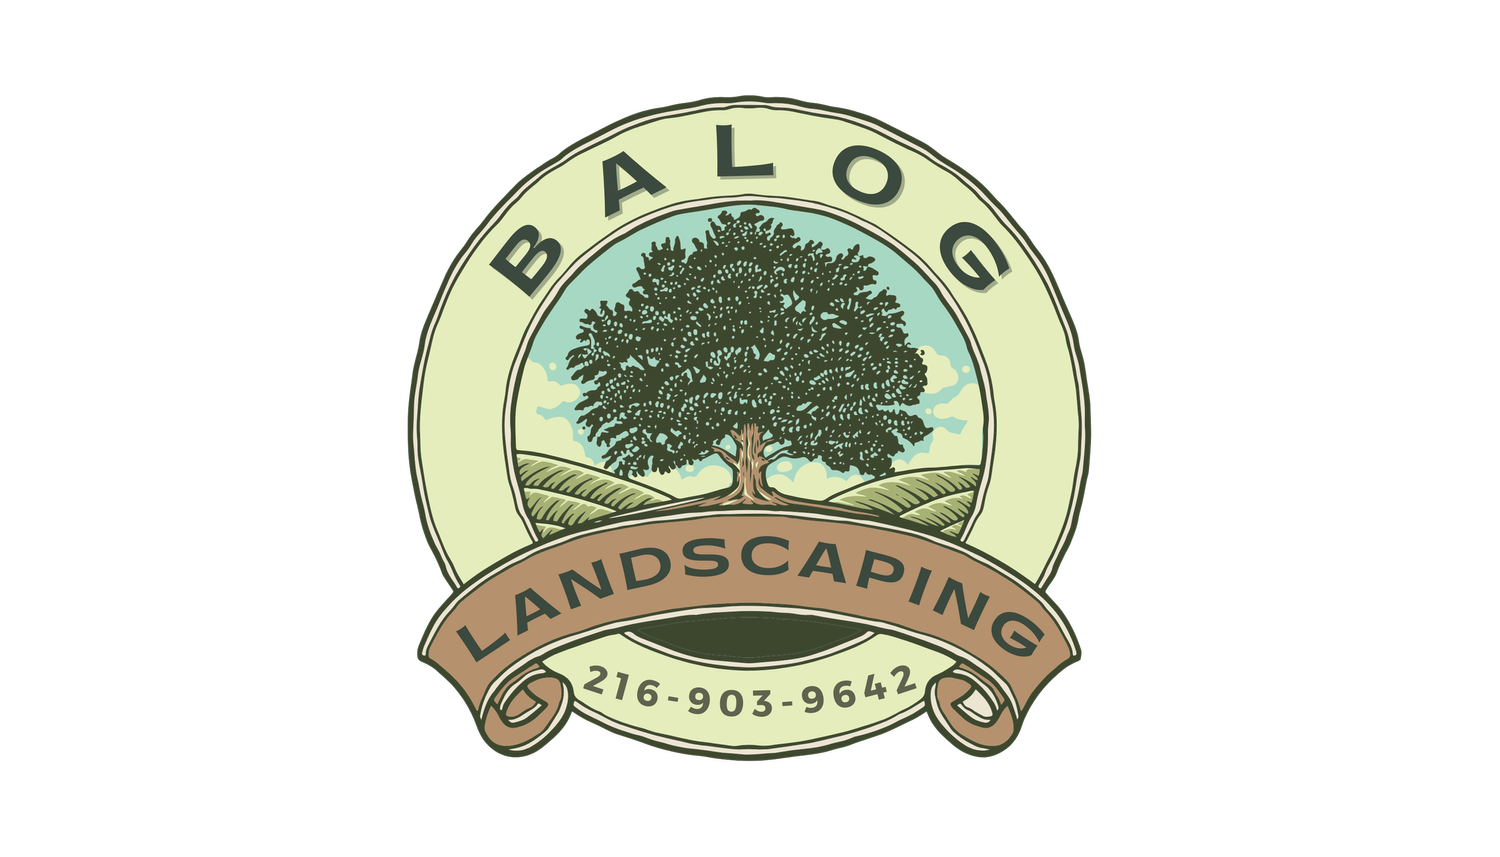 Balog Landscaping